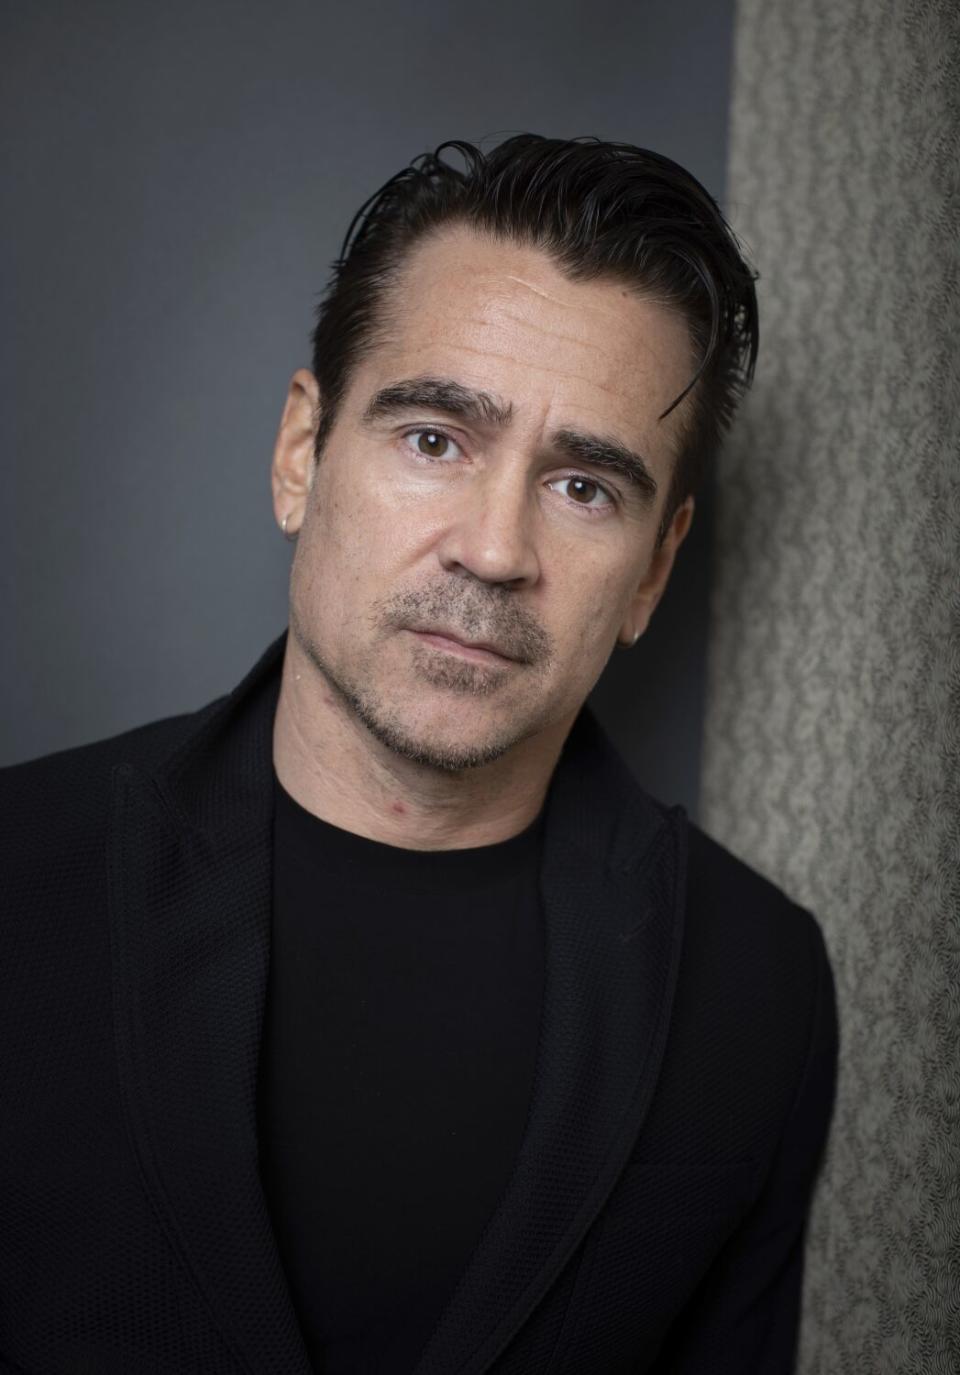 Colin Farrell wears a black sweater for a portrait.